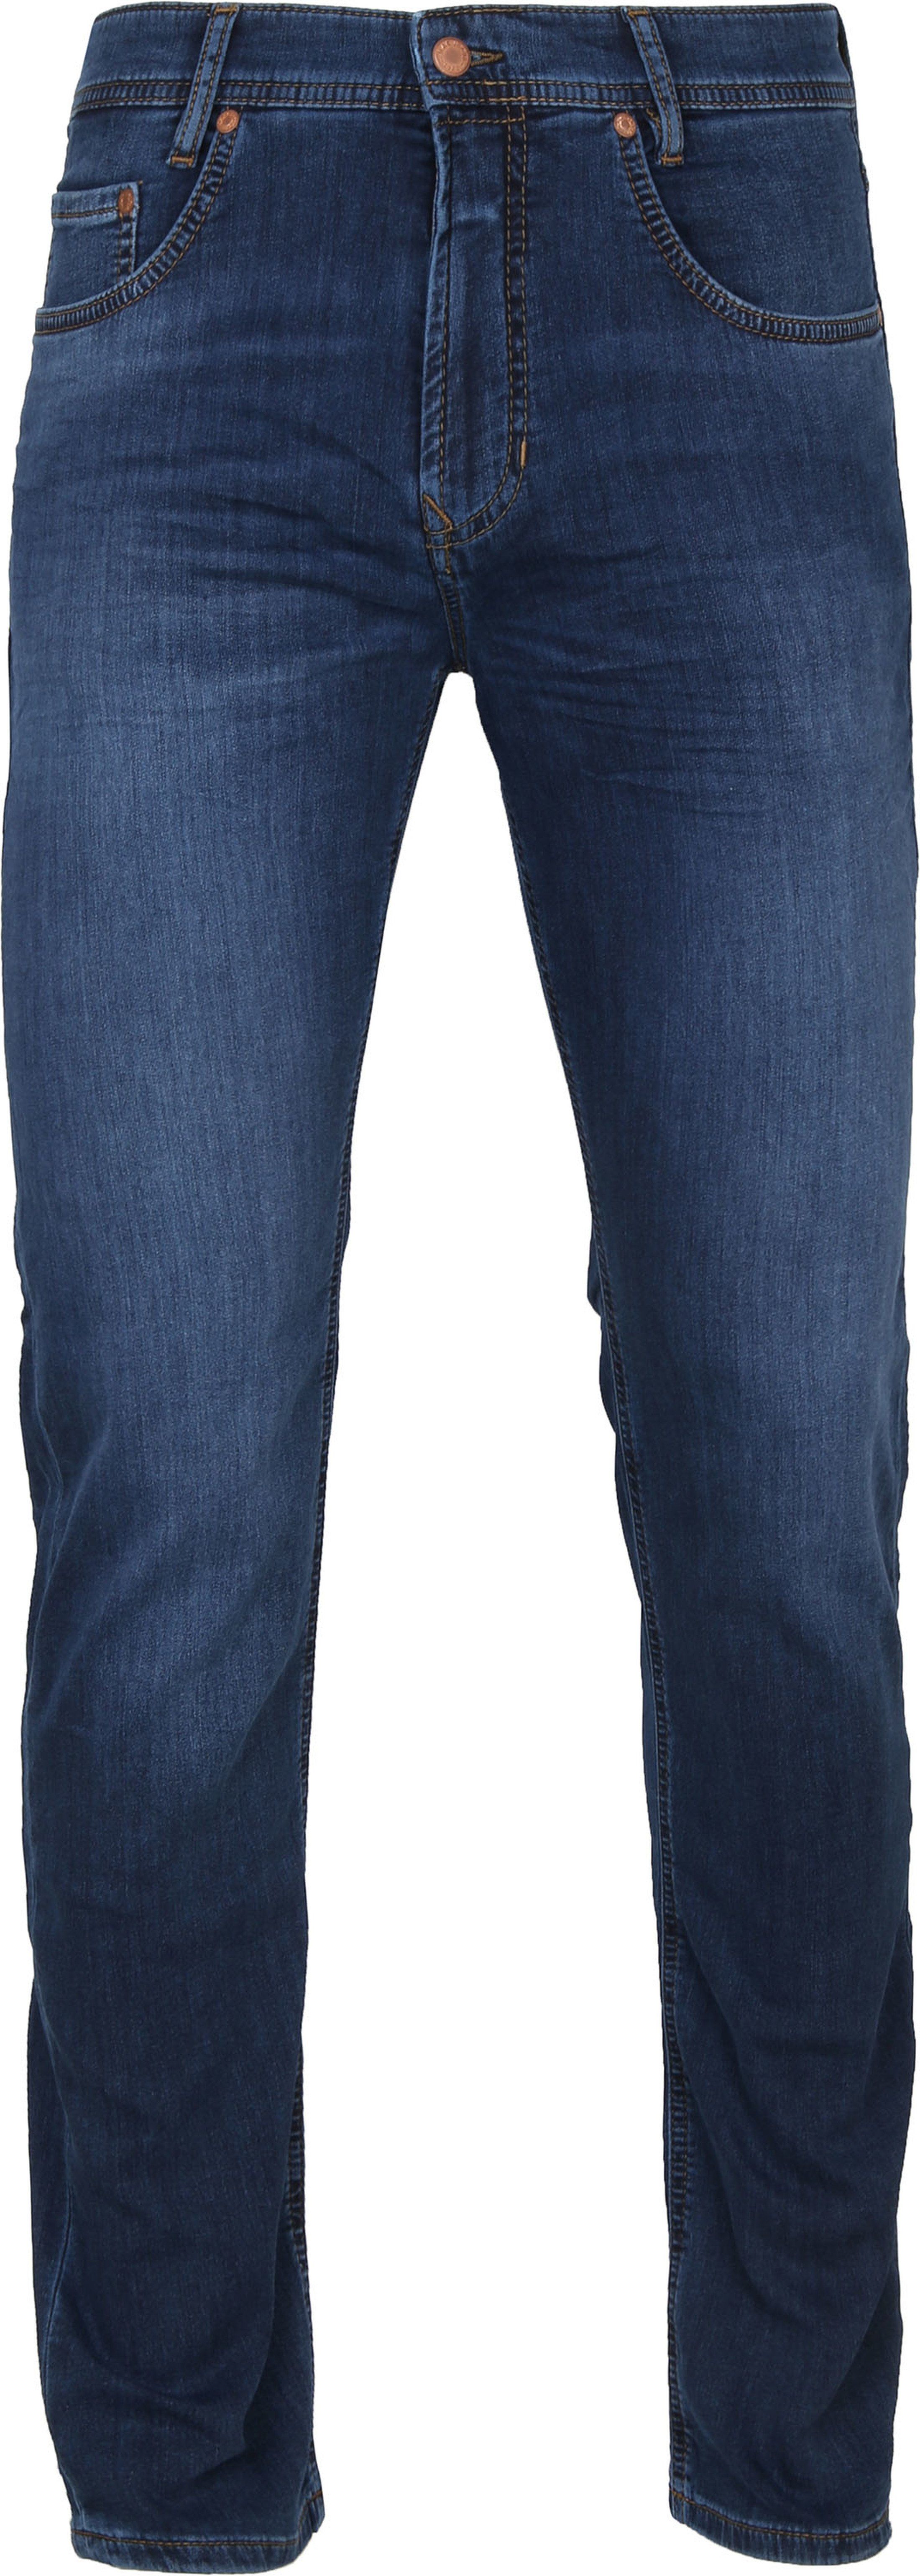 Mac Jog'n Jeans Blue size W 30